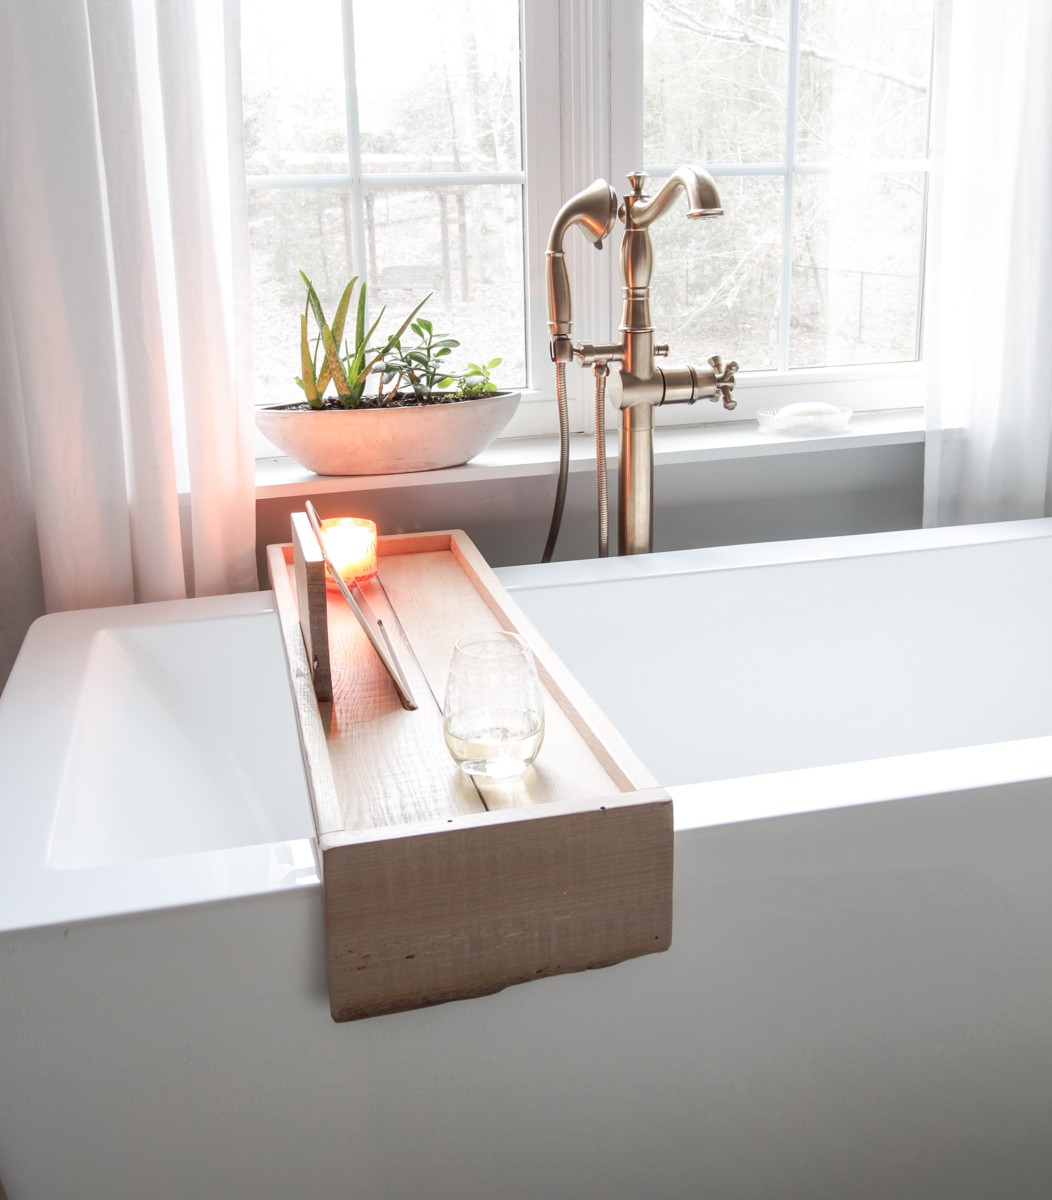 Best ideas about DIY Wood Bathtub
. Save or Pin DIY Bathtub Tray with Reclaimed Wood Now.